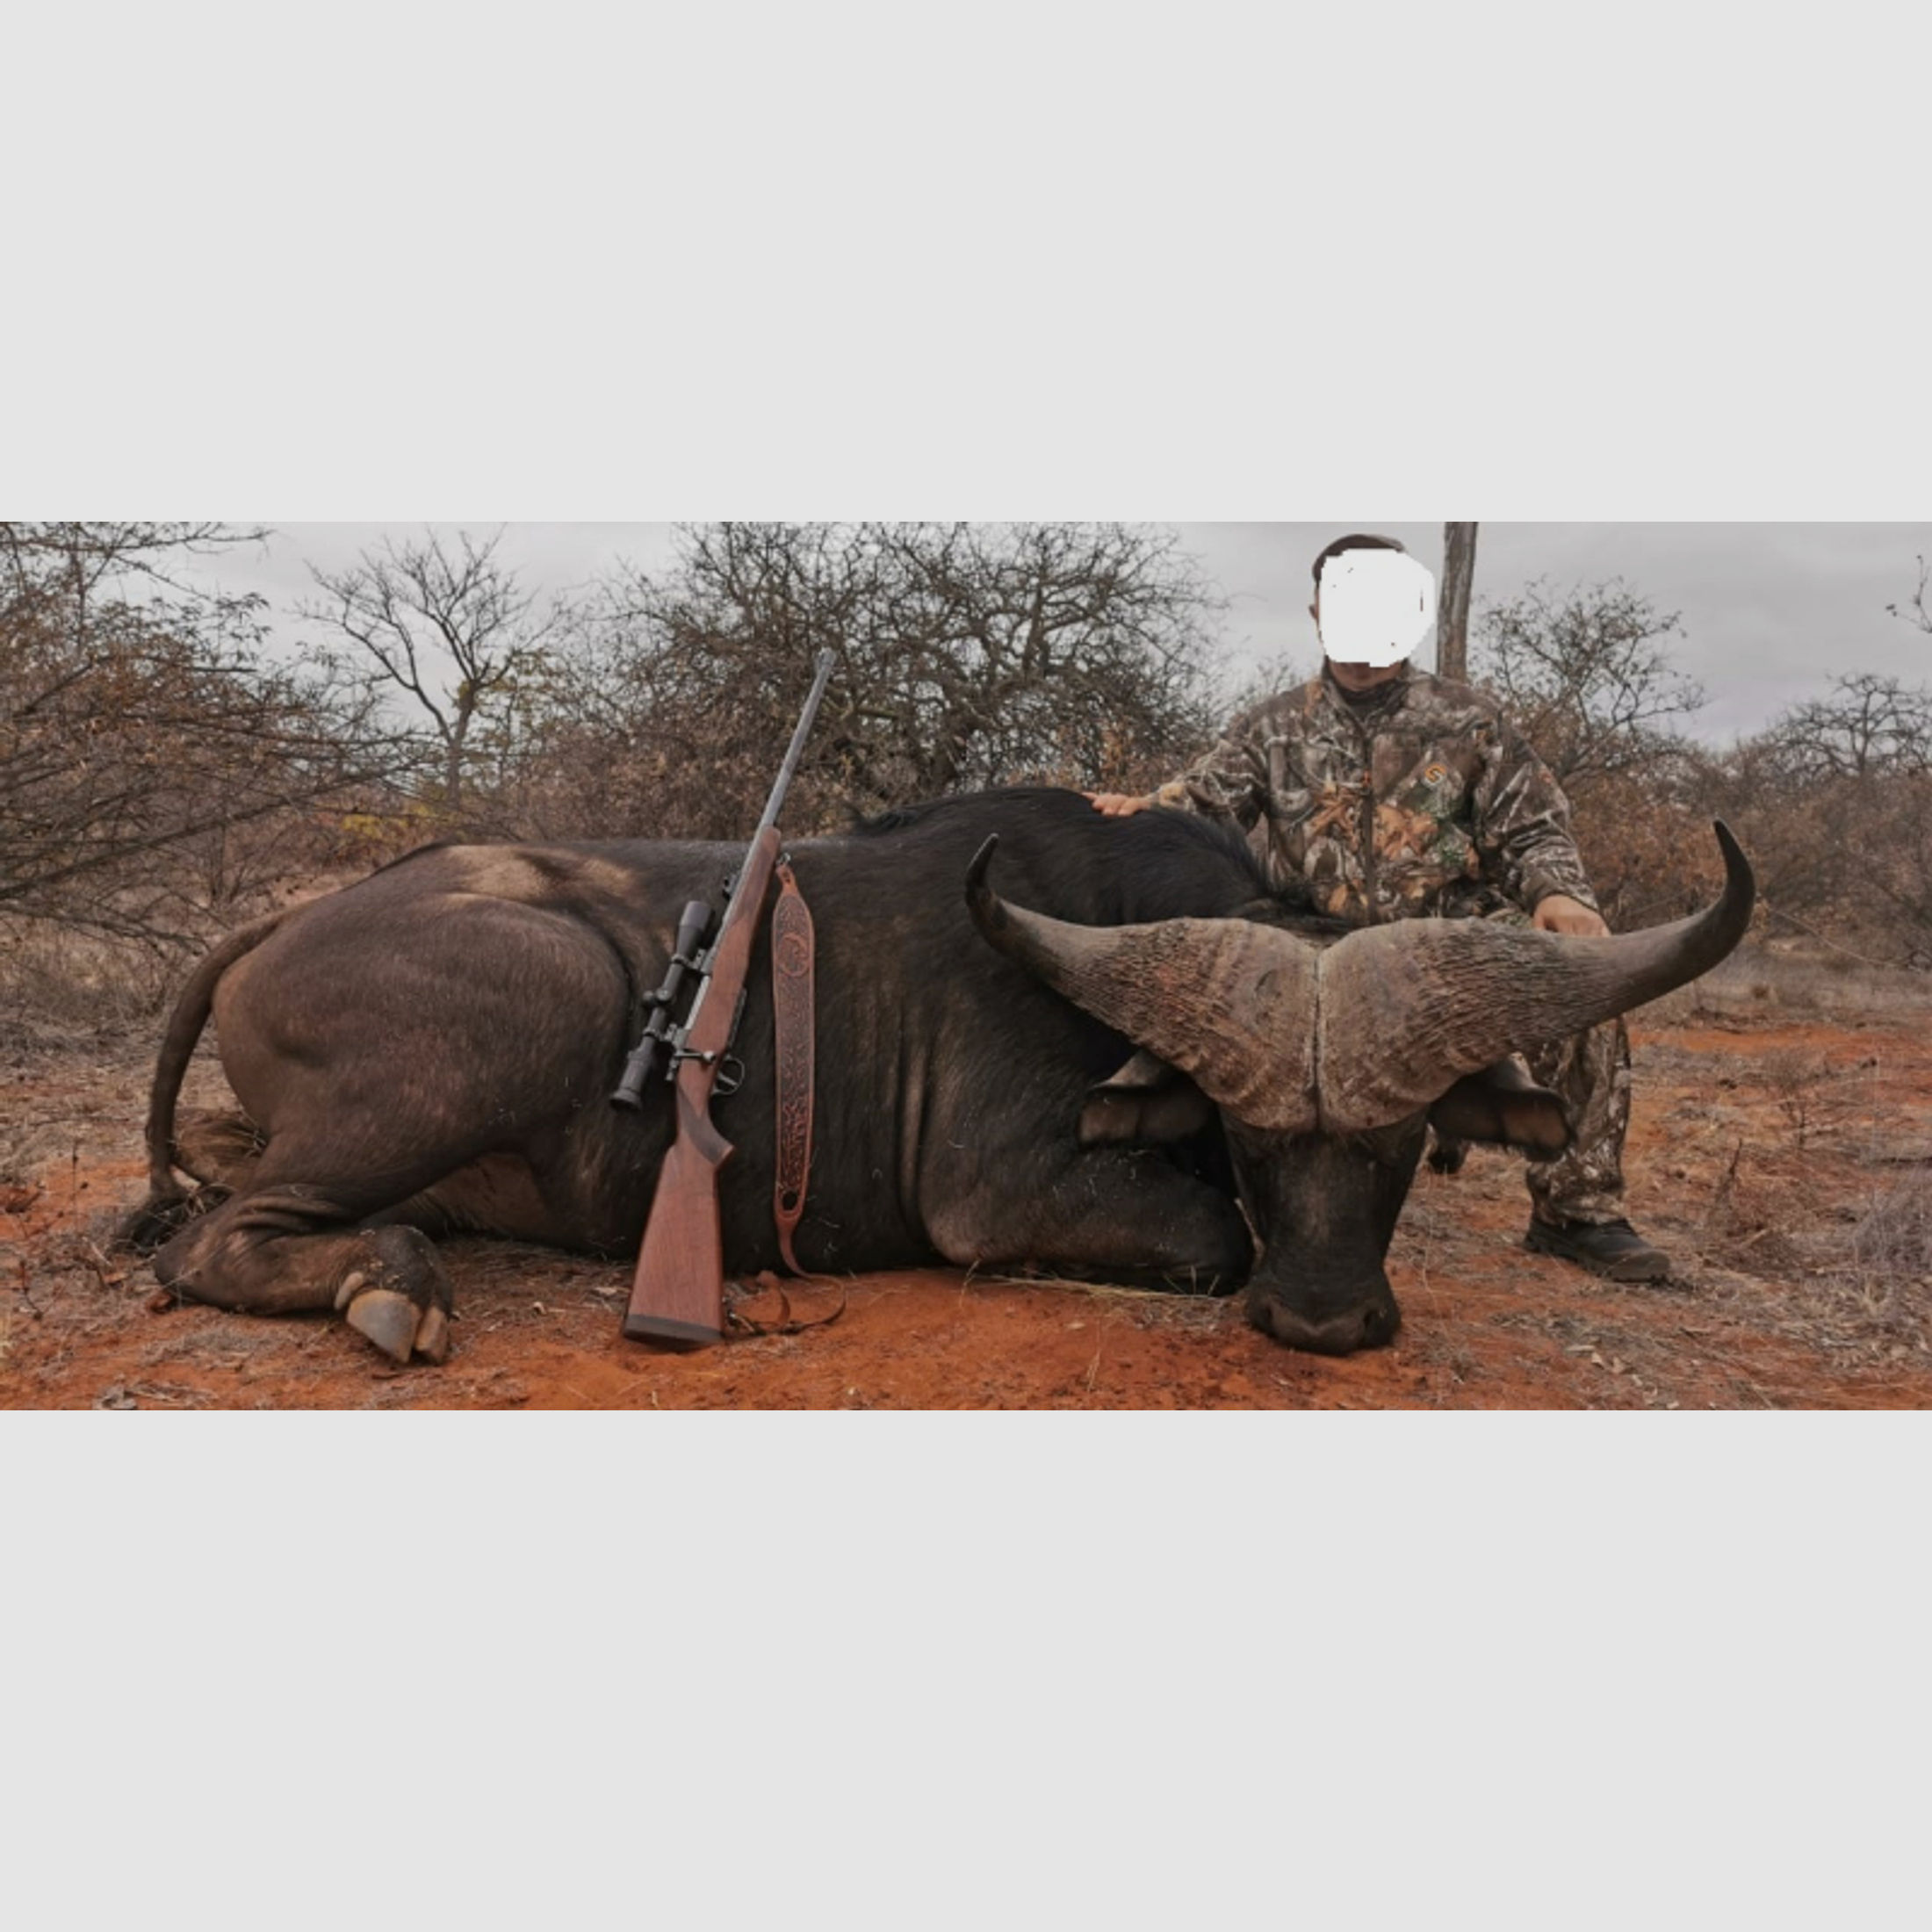 Büffel-Jagd ohne Limit in Südafrika (Limpopo Valley)